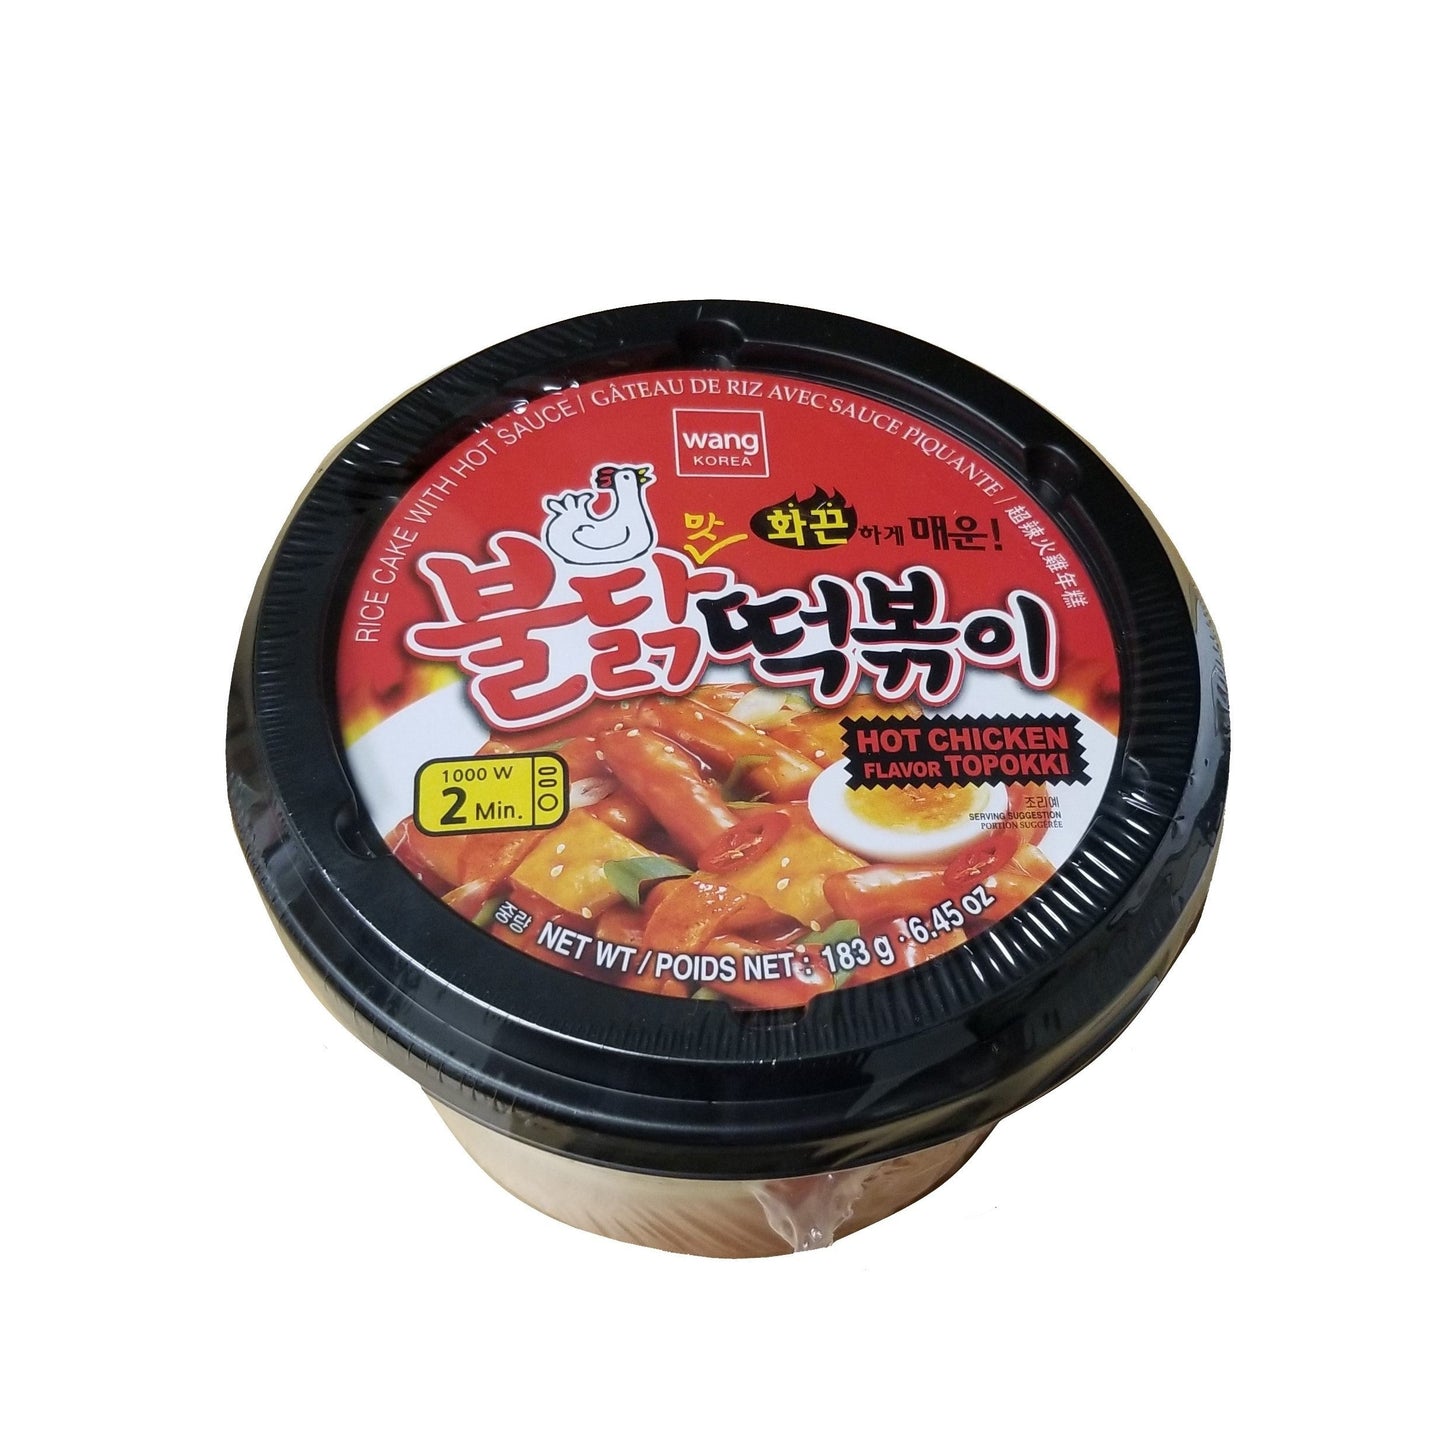 Samjin Wang Hot Chicken Tteokbokki Bowl (183g) - CoKoYam